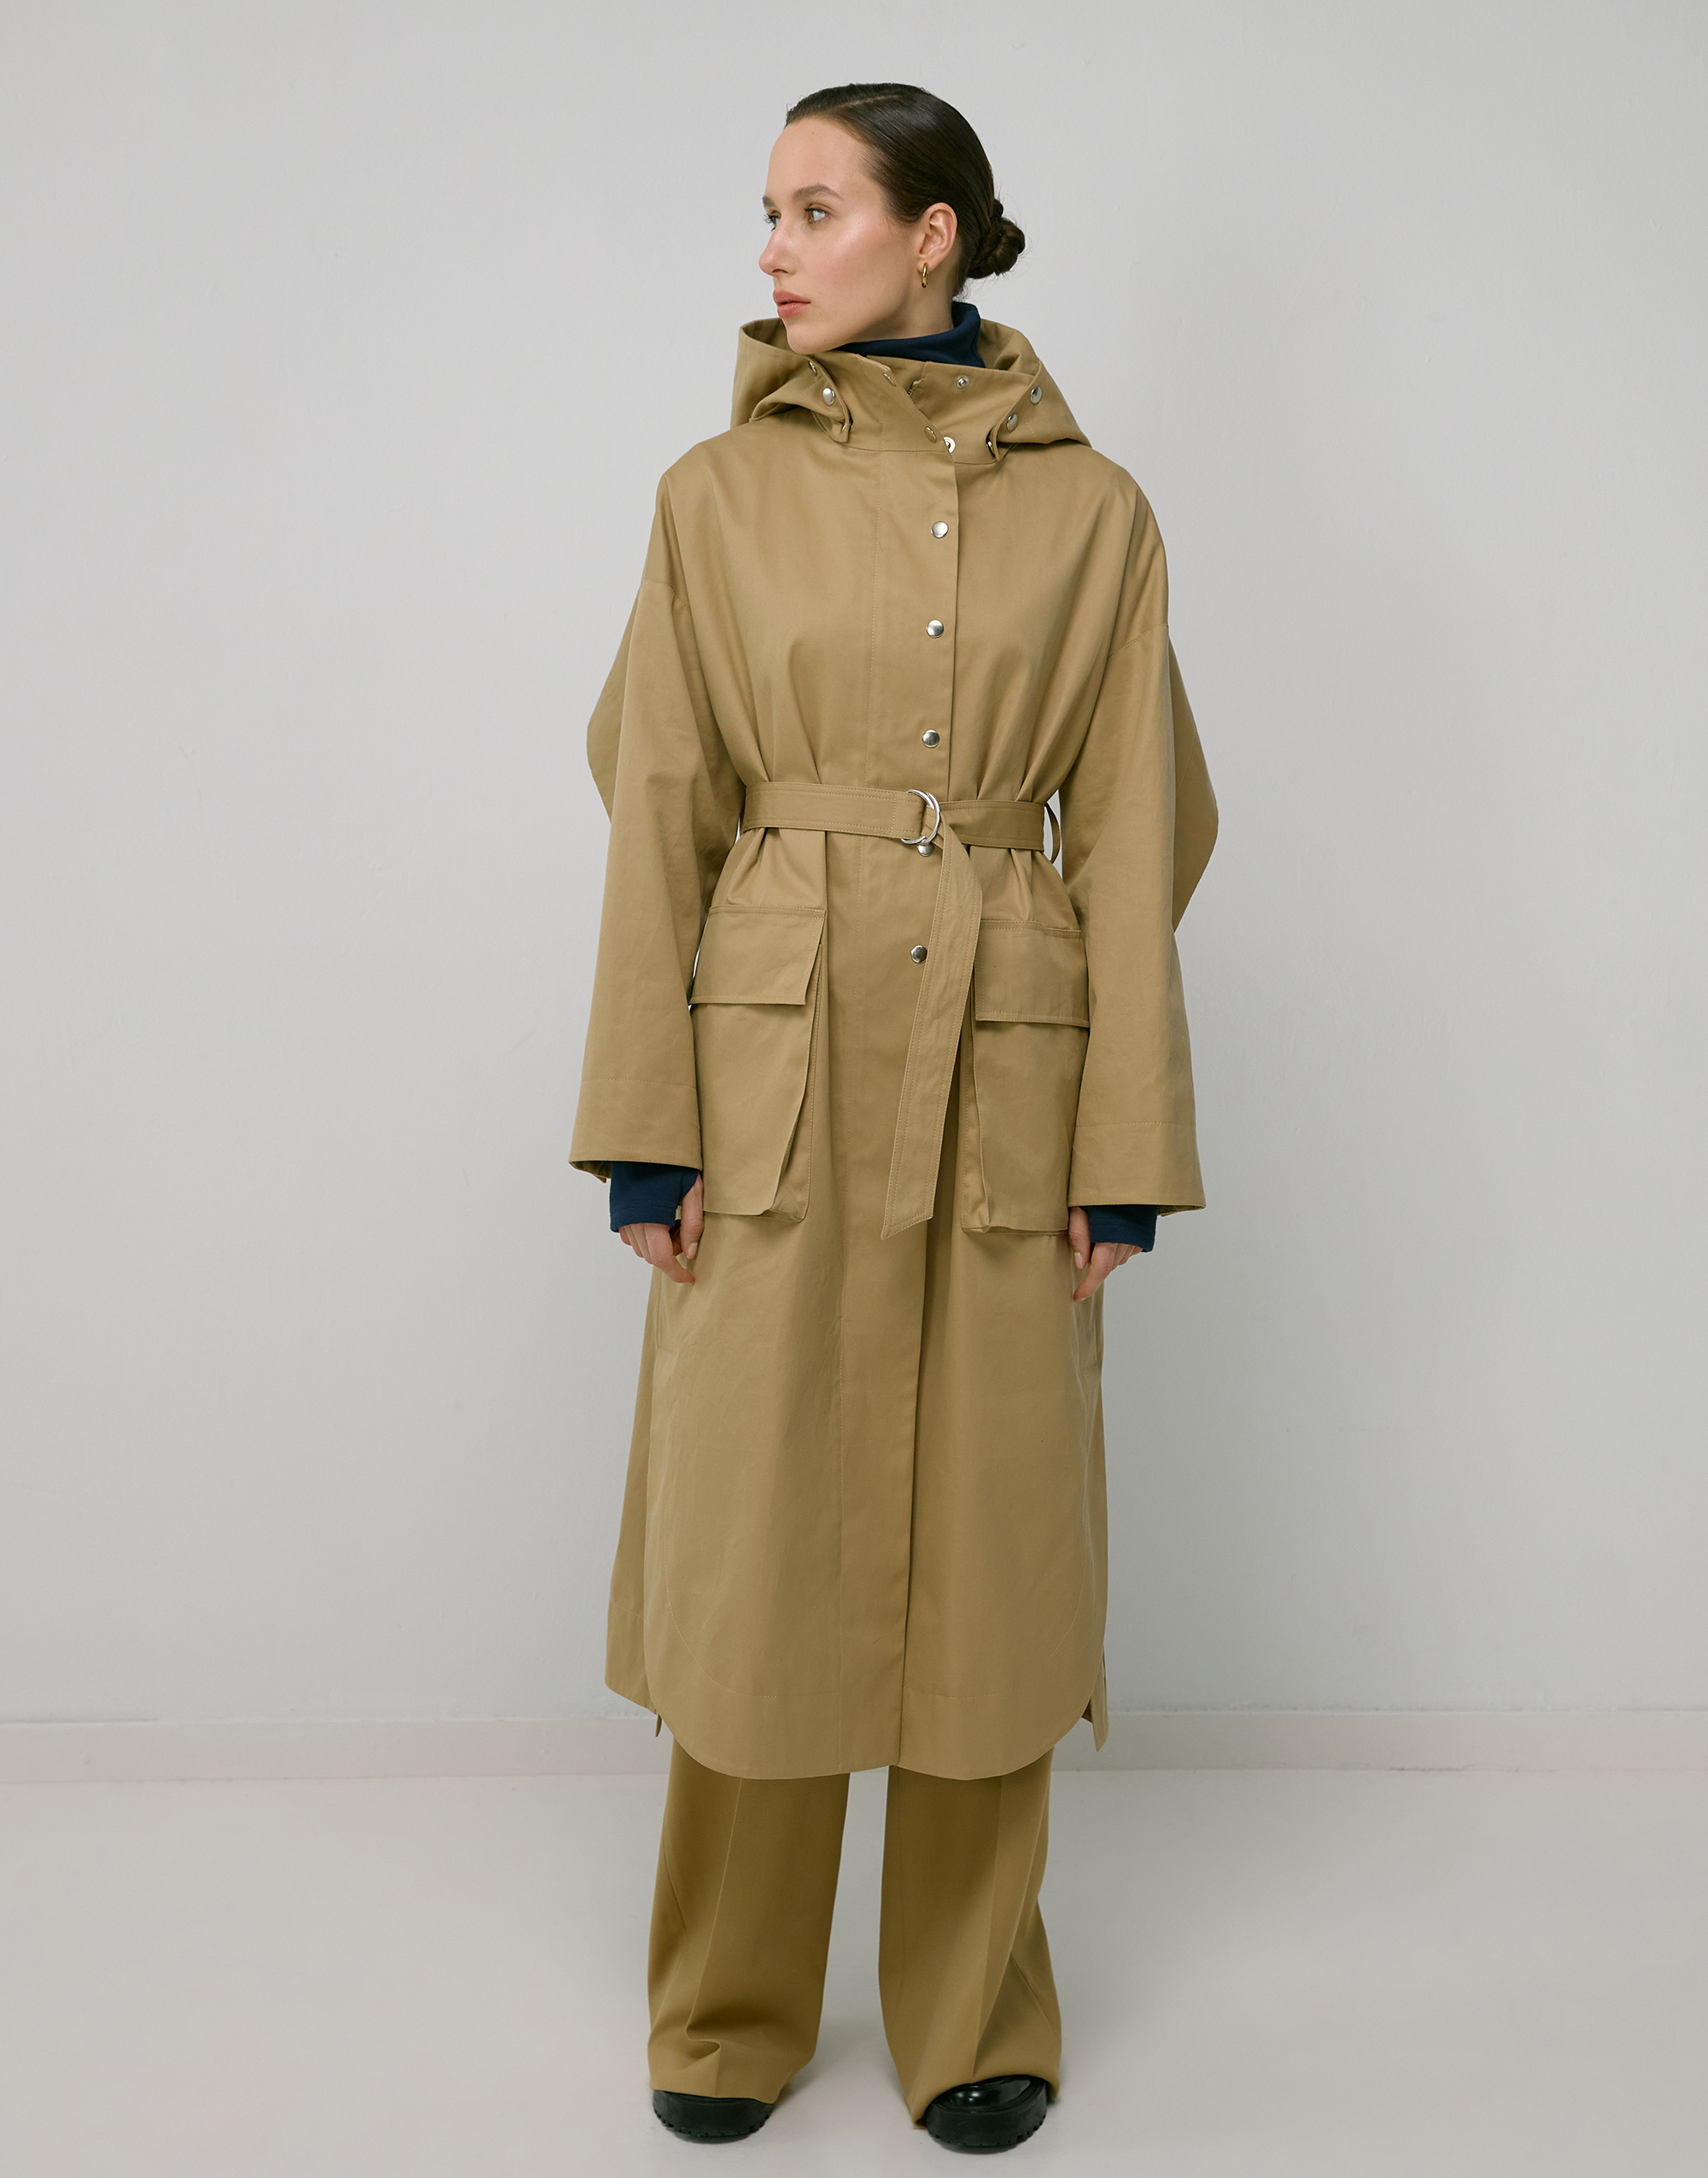 Raincoat, pattern №908